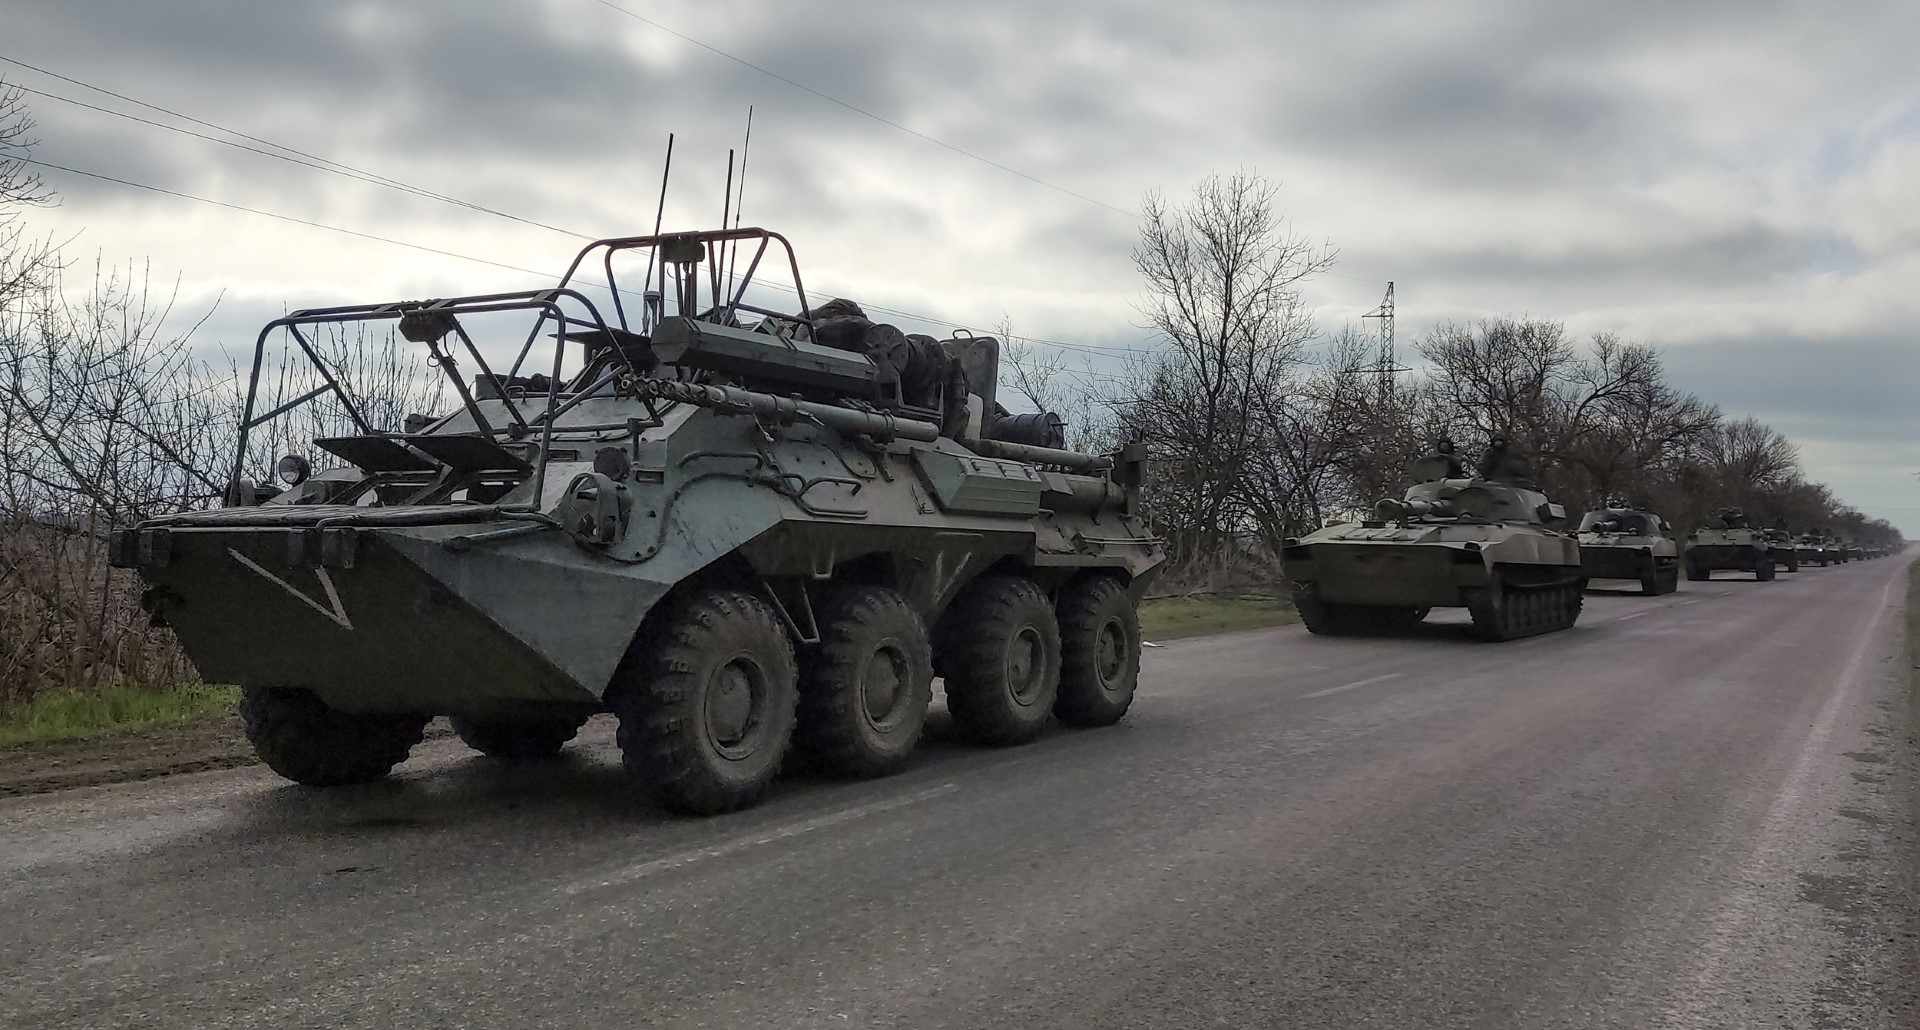 Russian general, 200 soldiers said killed in Ukrainian military strike